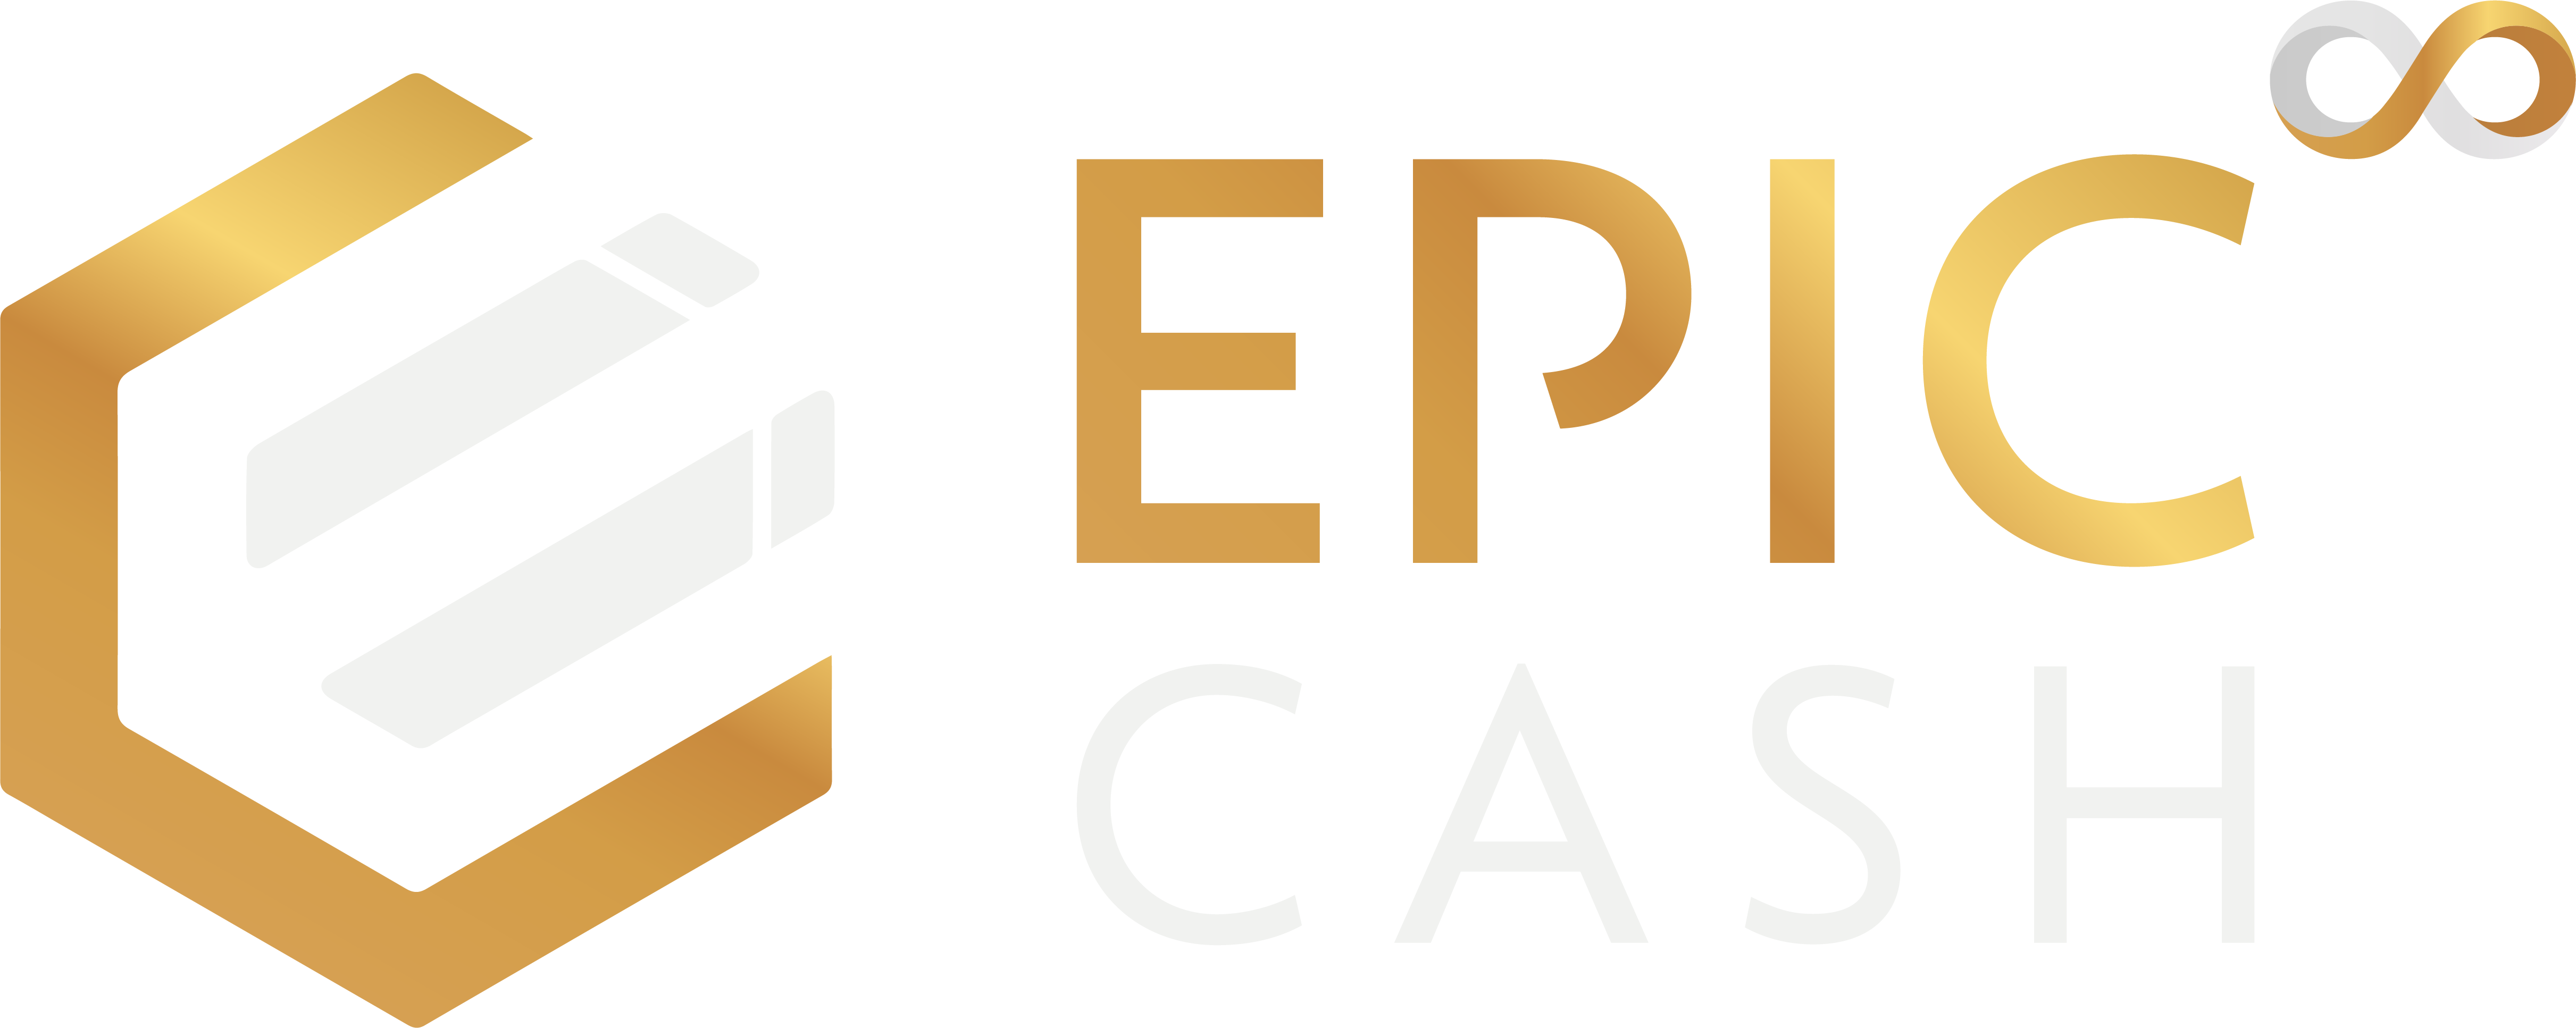 Epic Cash – privacy crypto coin